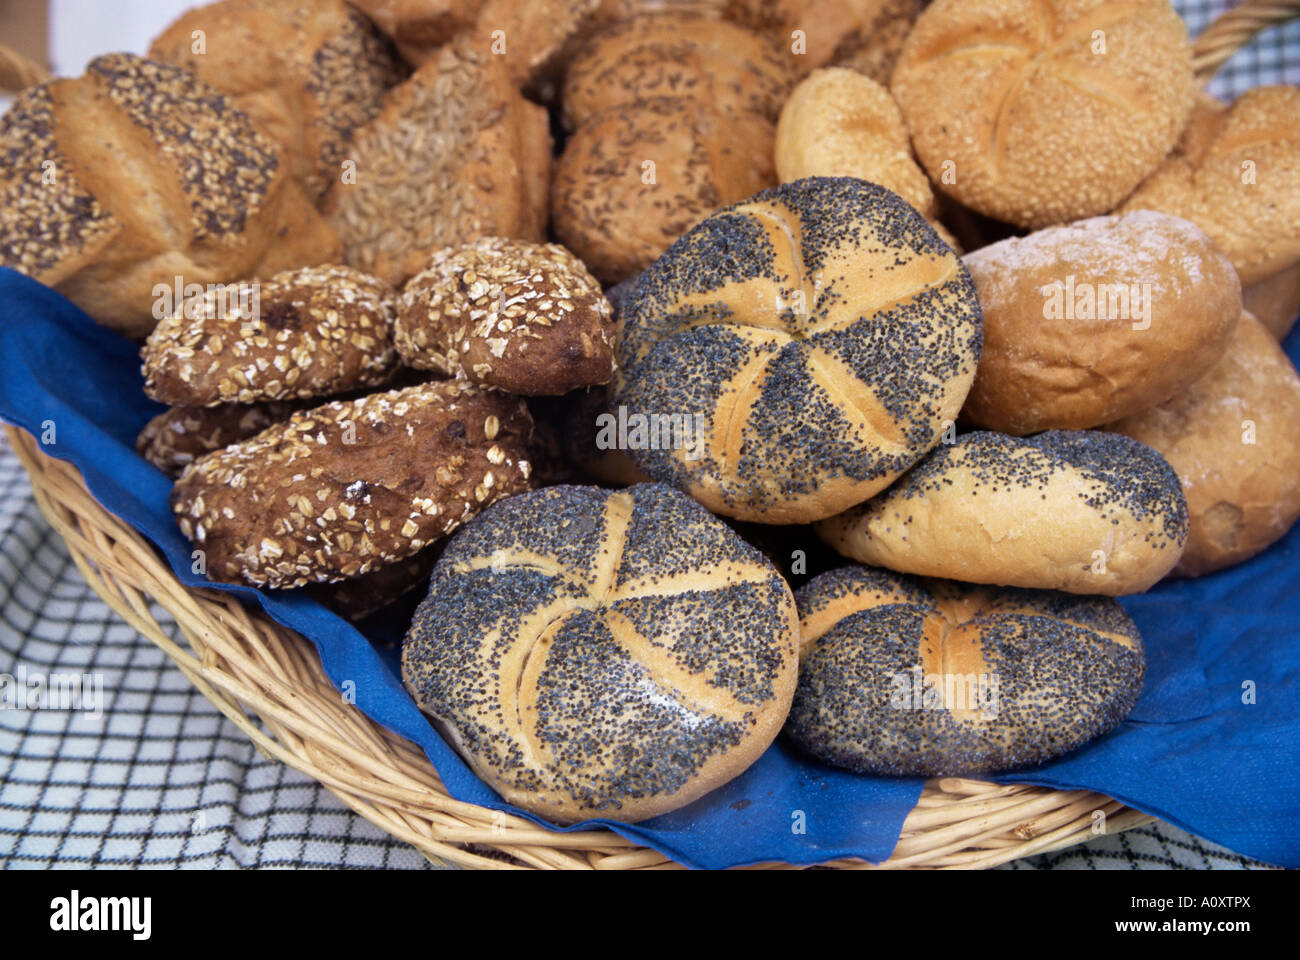 Brotzeit bread rolls Bavaria Germany Europe Stock Photo